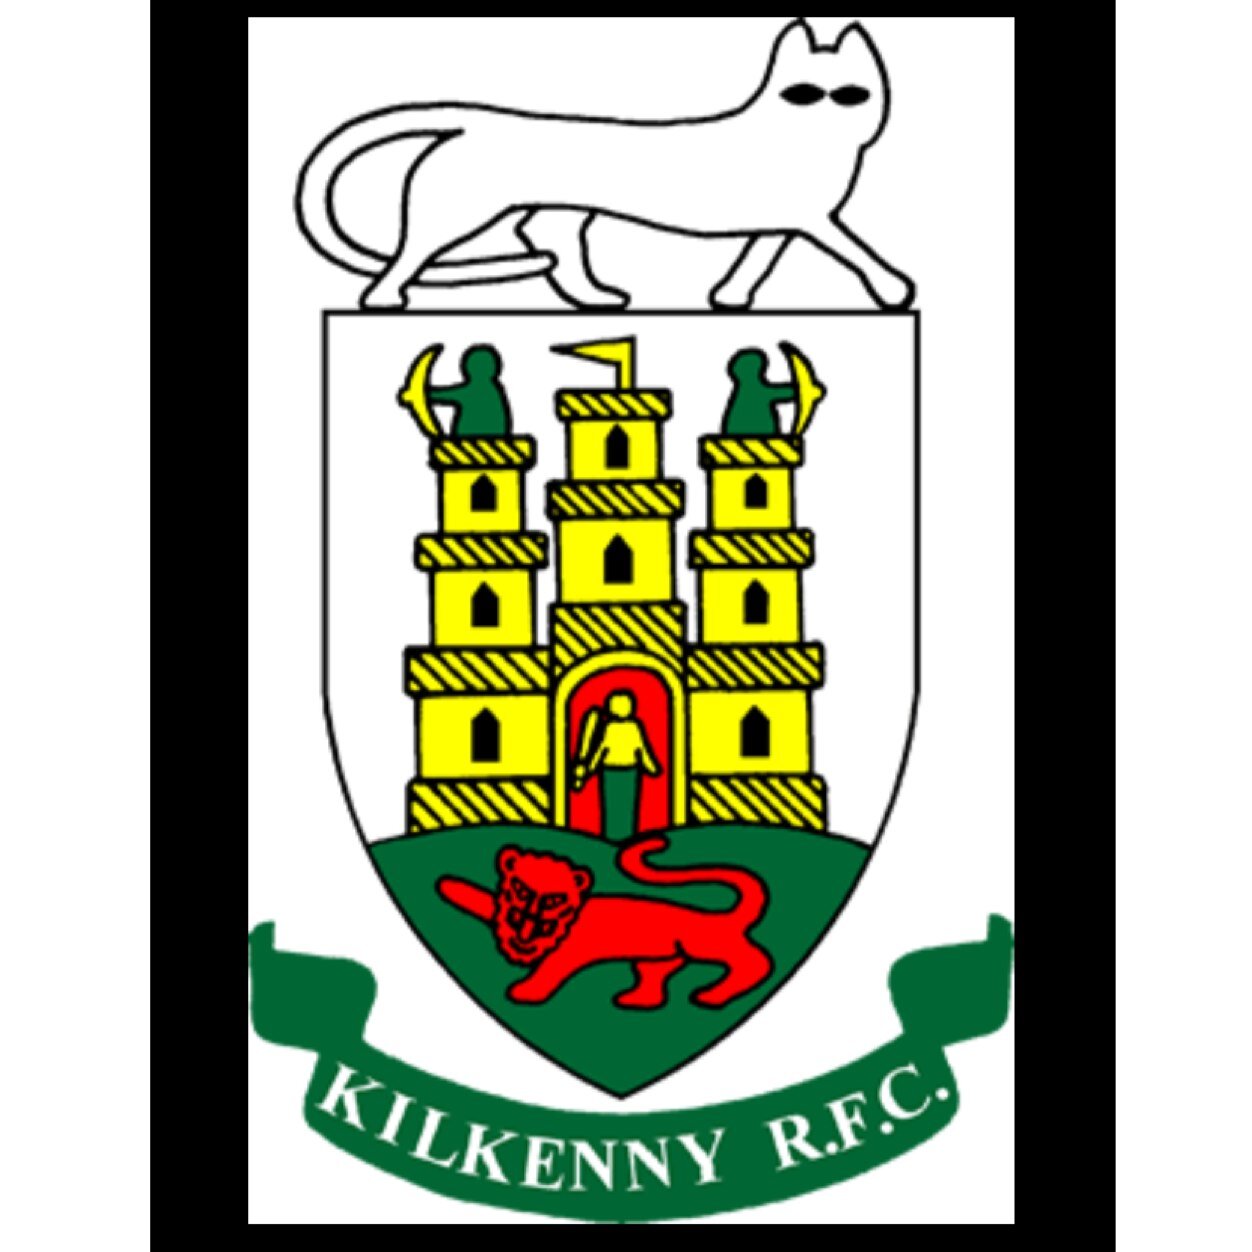 Kilkenny Rugby